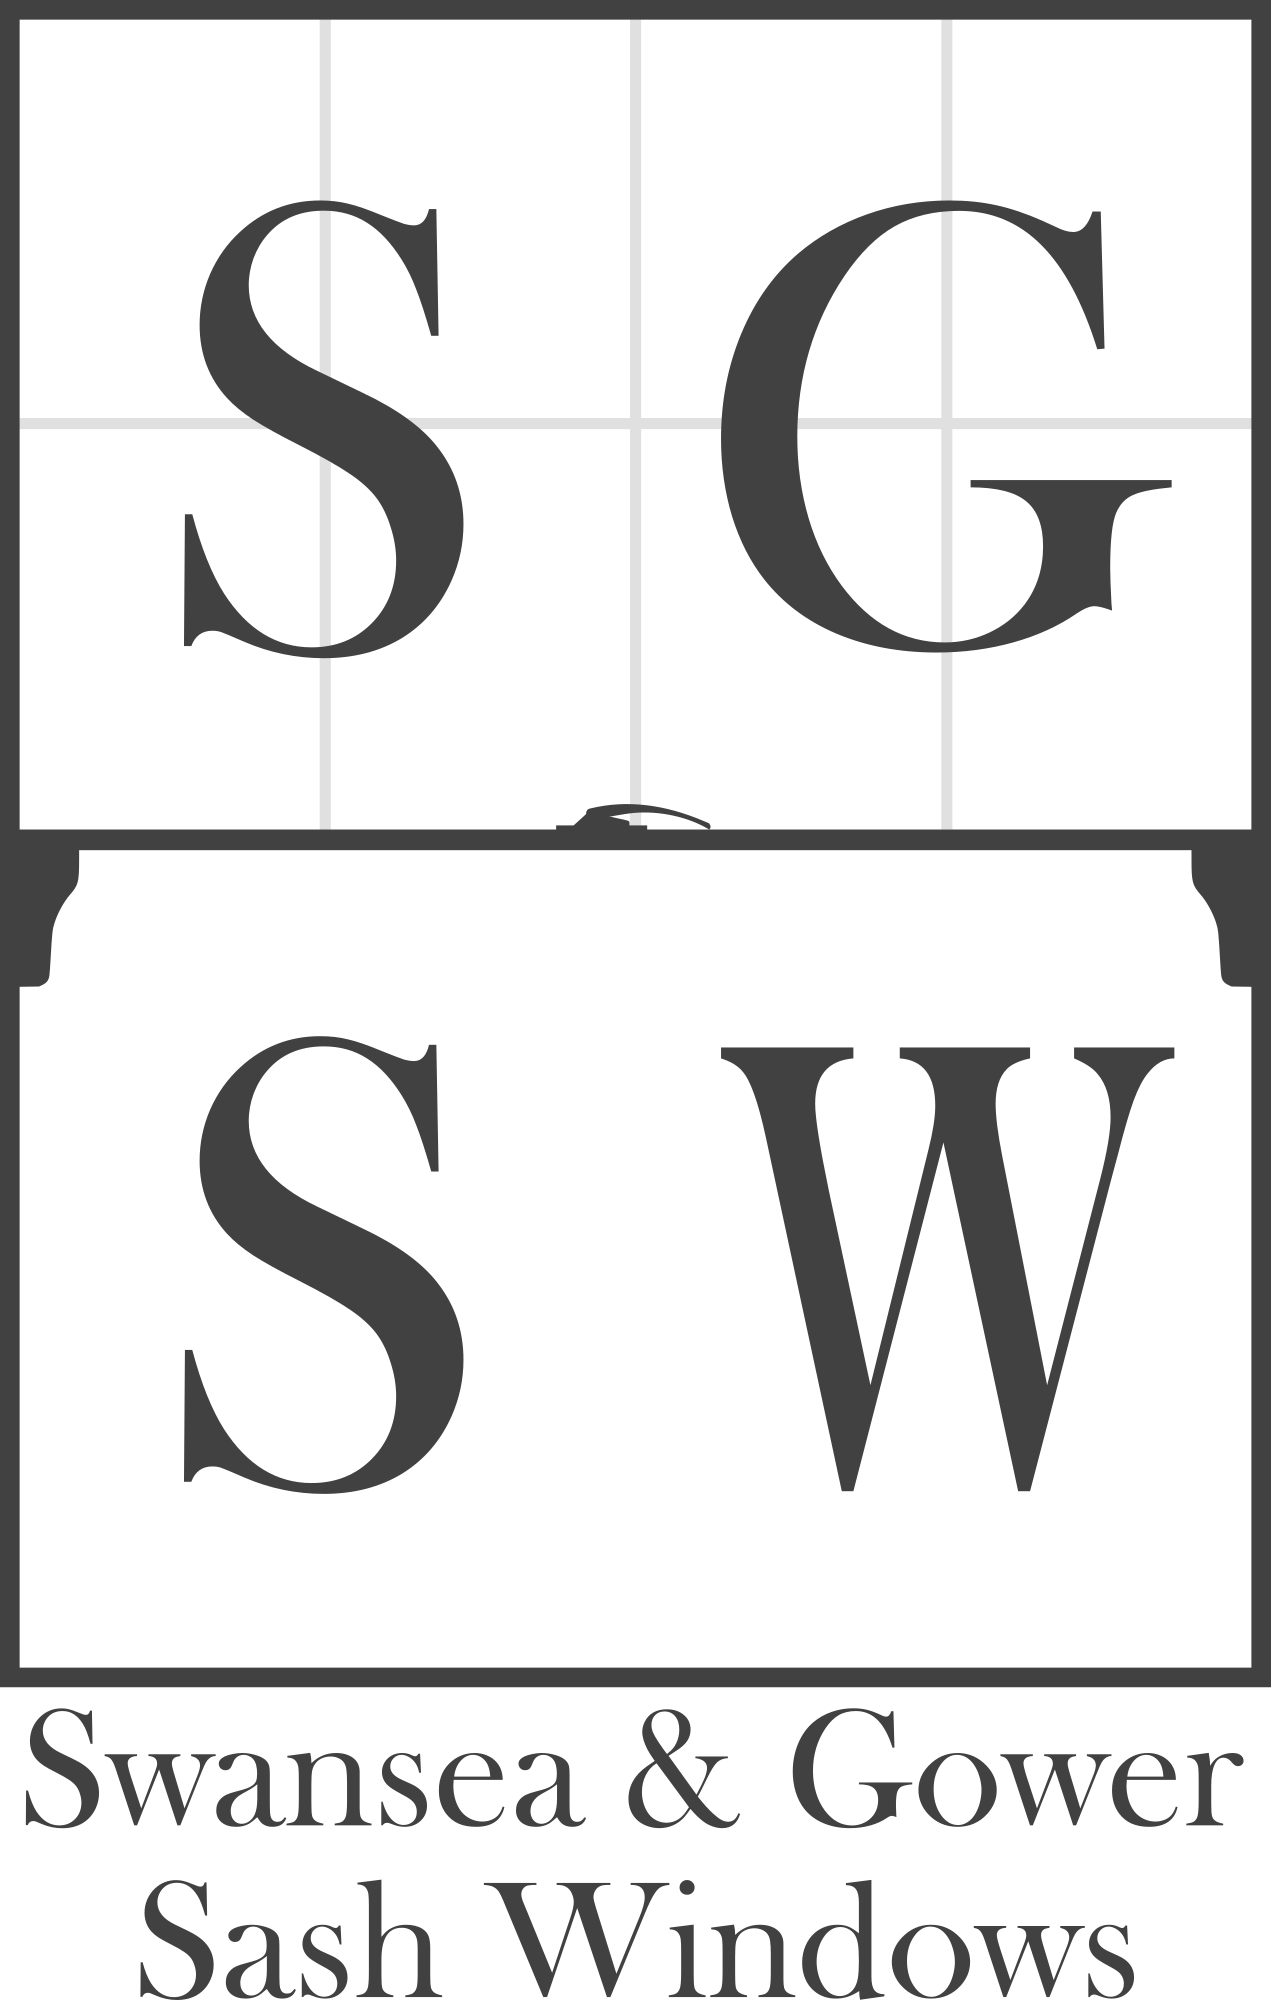 Company logo for Swansea & Gower Sash Windows